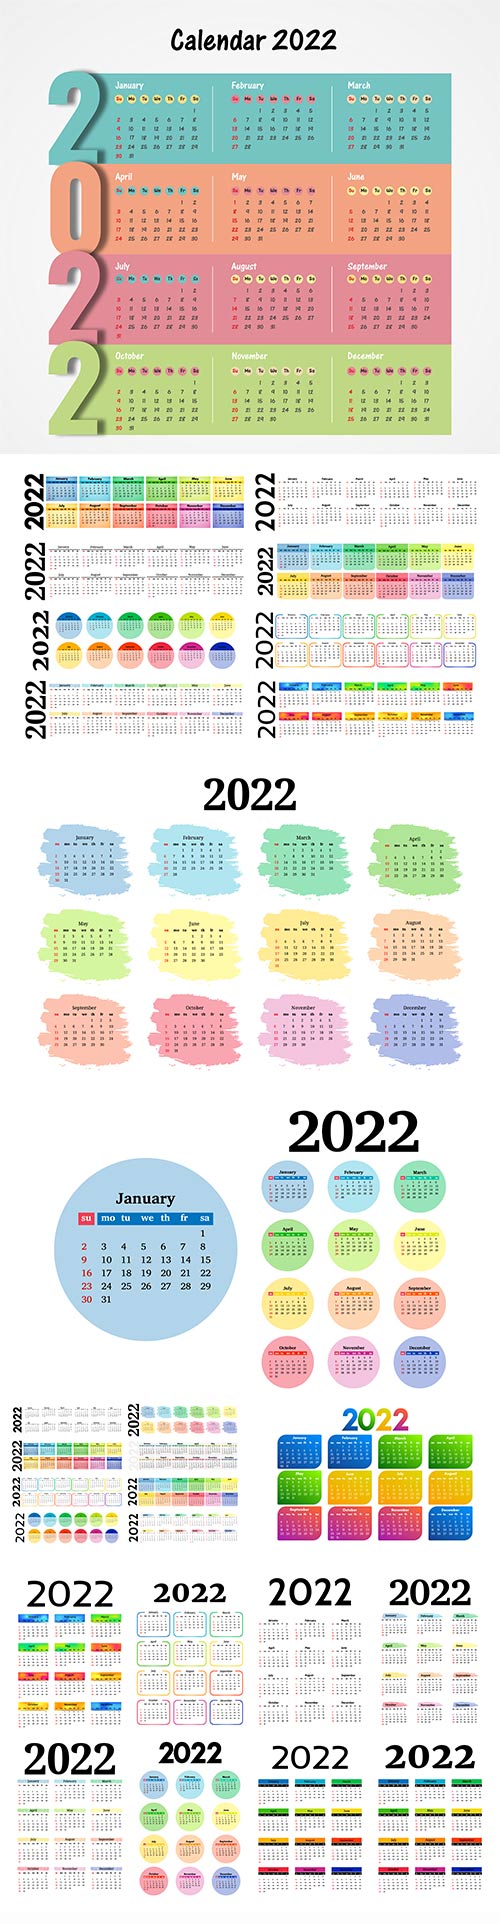 New year 2022 poster calendar design template vector